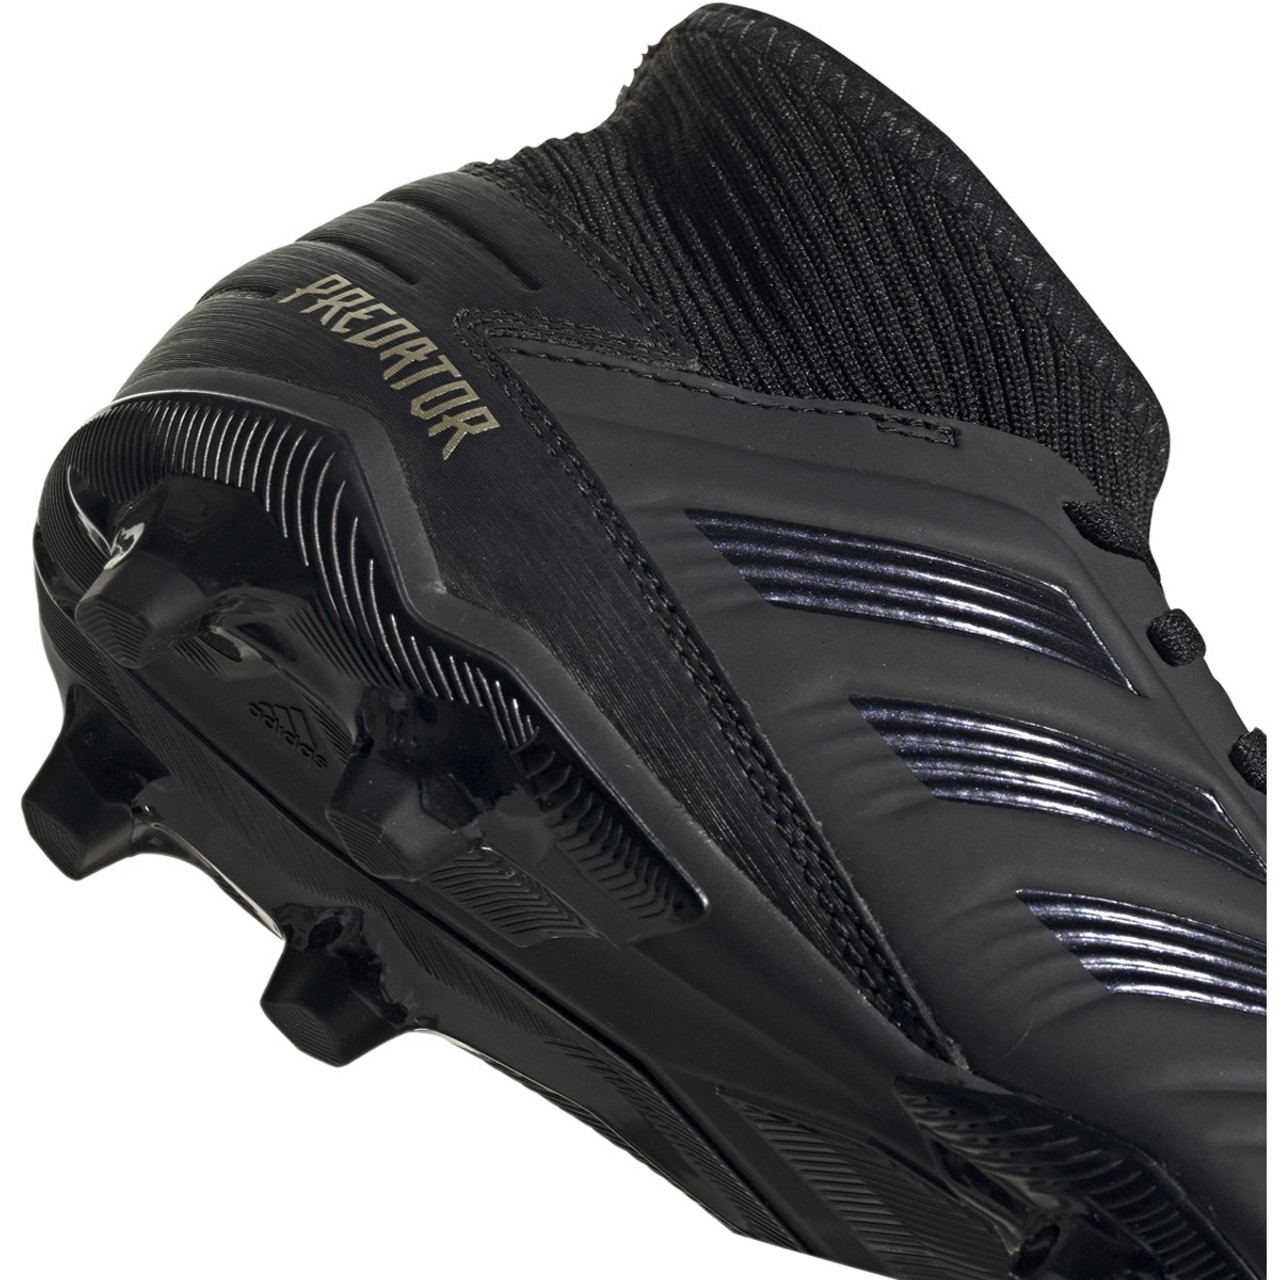 Adidas Predator 19 3 Fg Junior Soccer Cleats G25794 Black